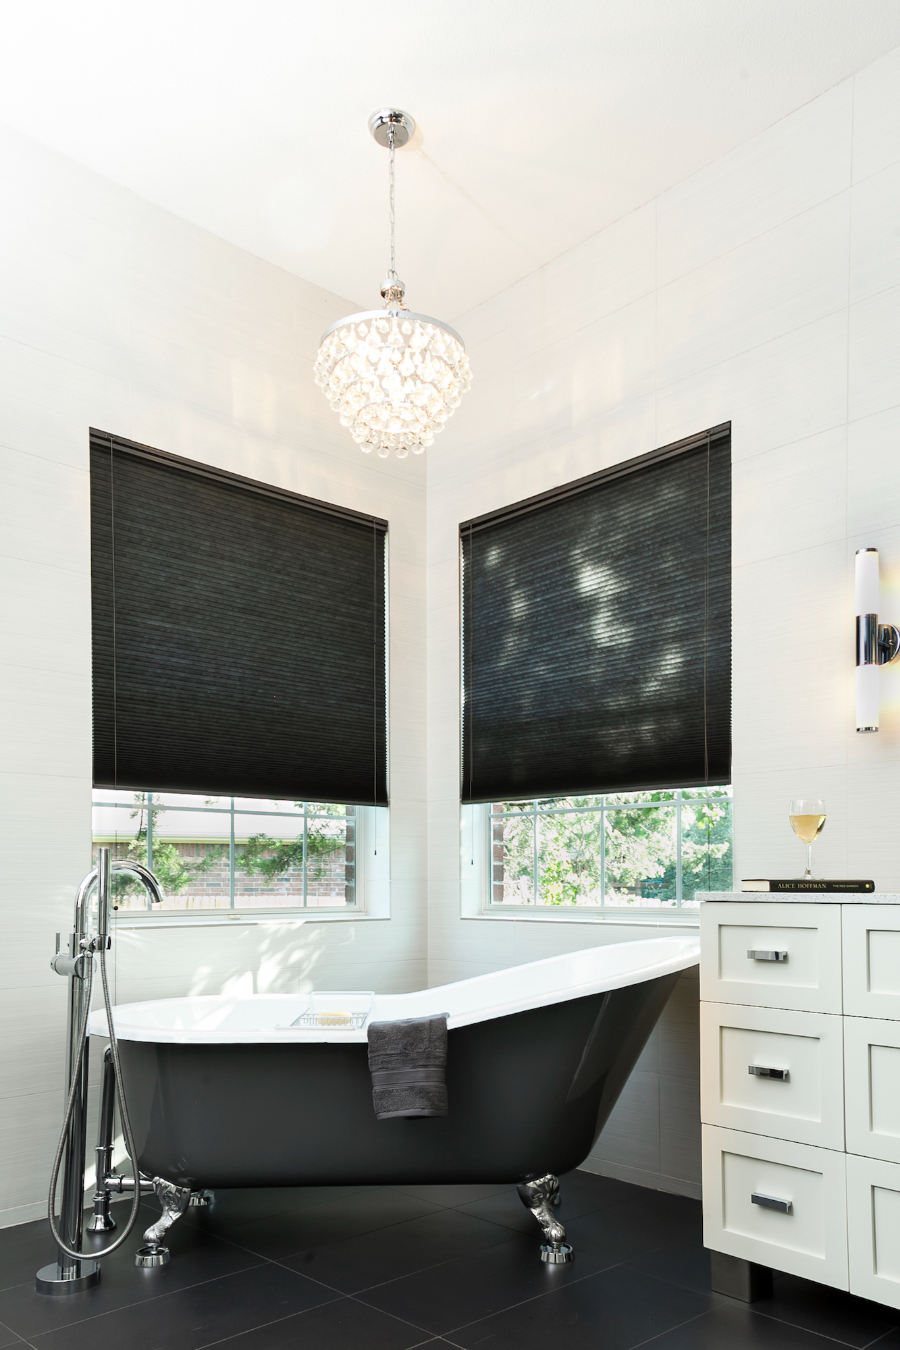 Allison Jaffe Interior Design: Bathroom Design Ideas. A black and white bathtub in the corner of the bathroom.